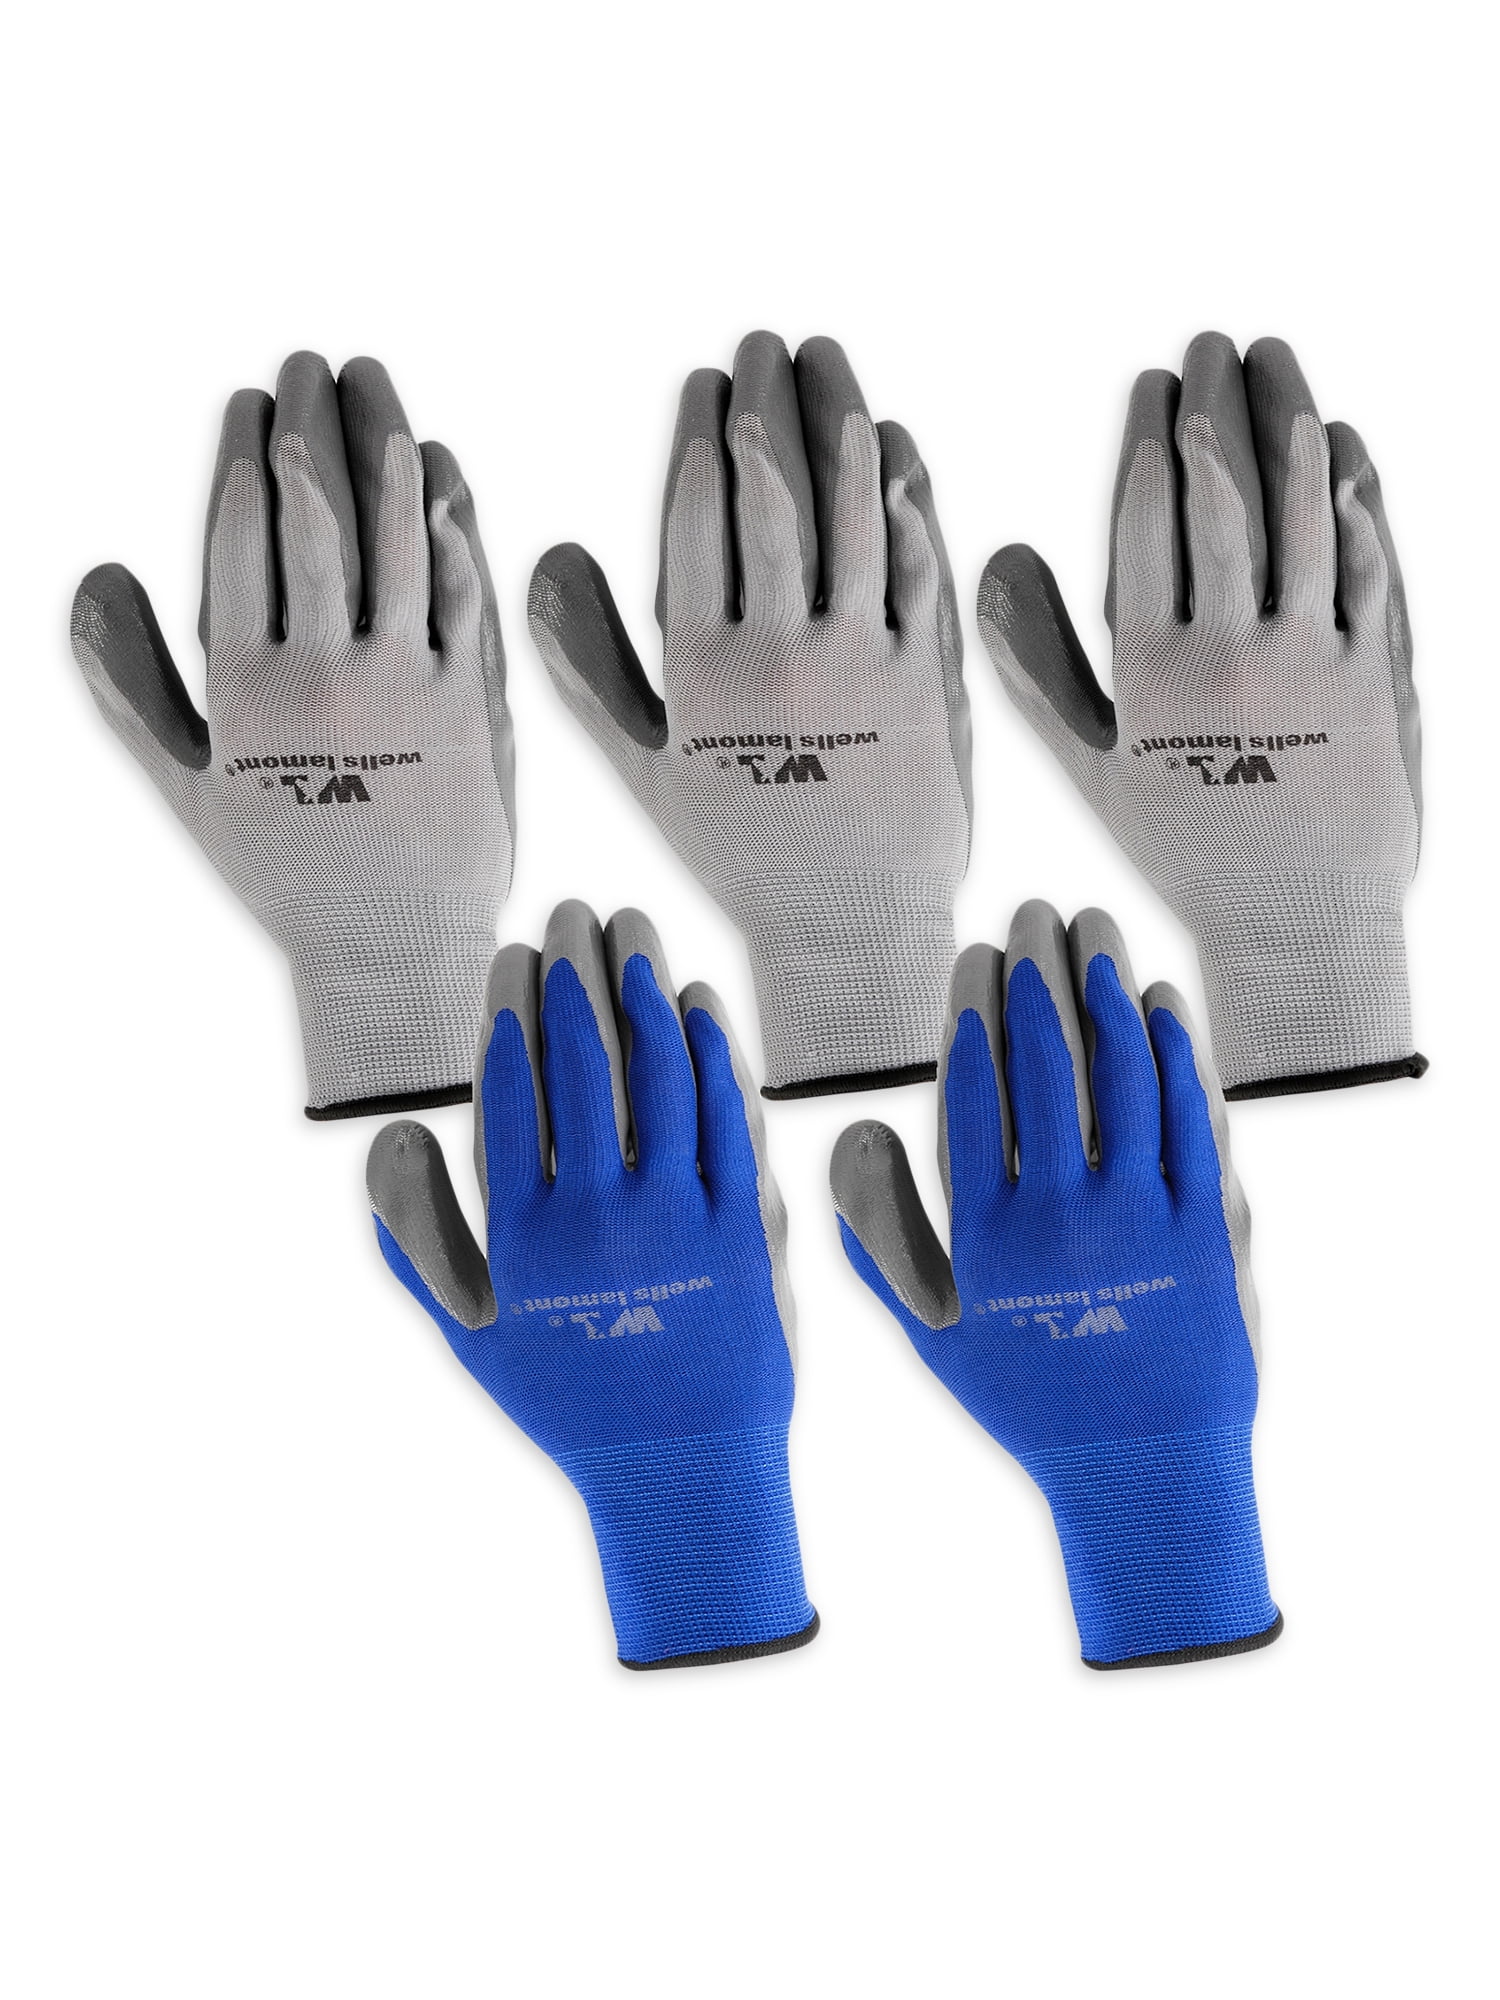 Wells Lamont Men's Large Dipped Nitrile Glove, 5 Pack, L R580la